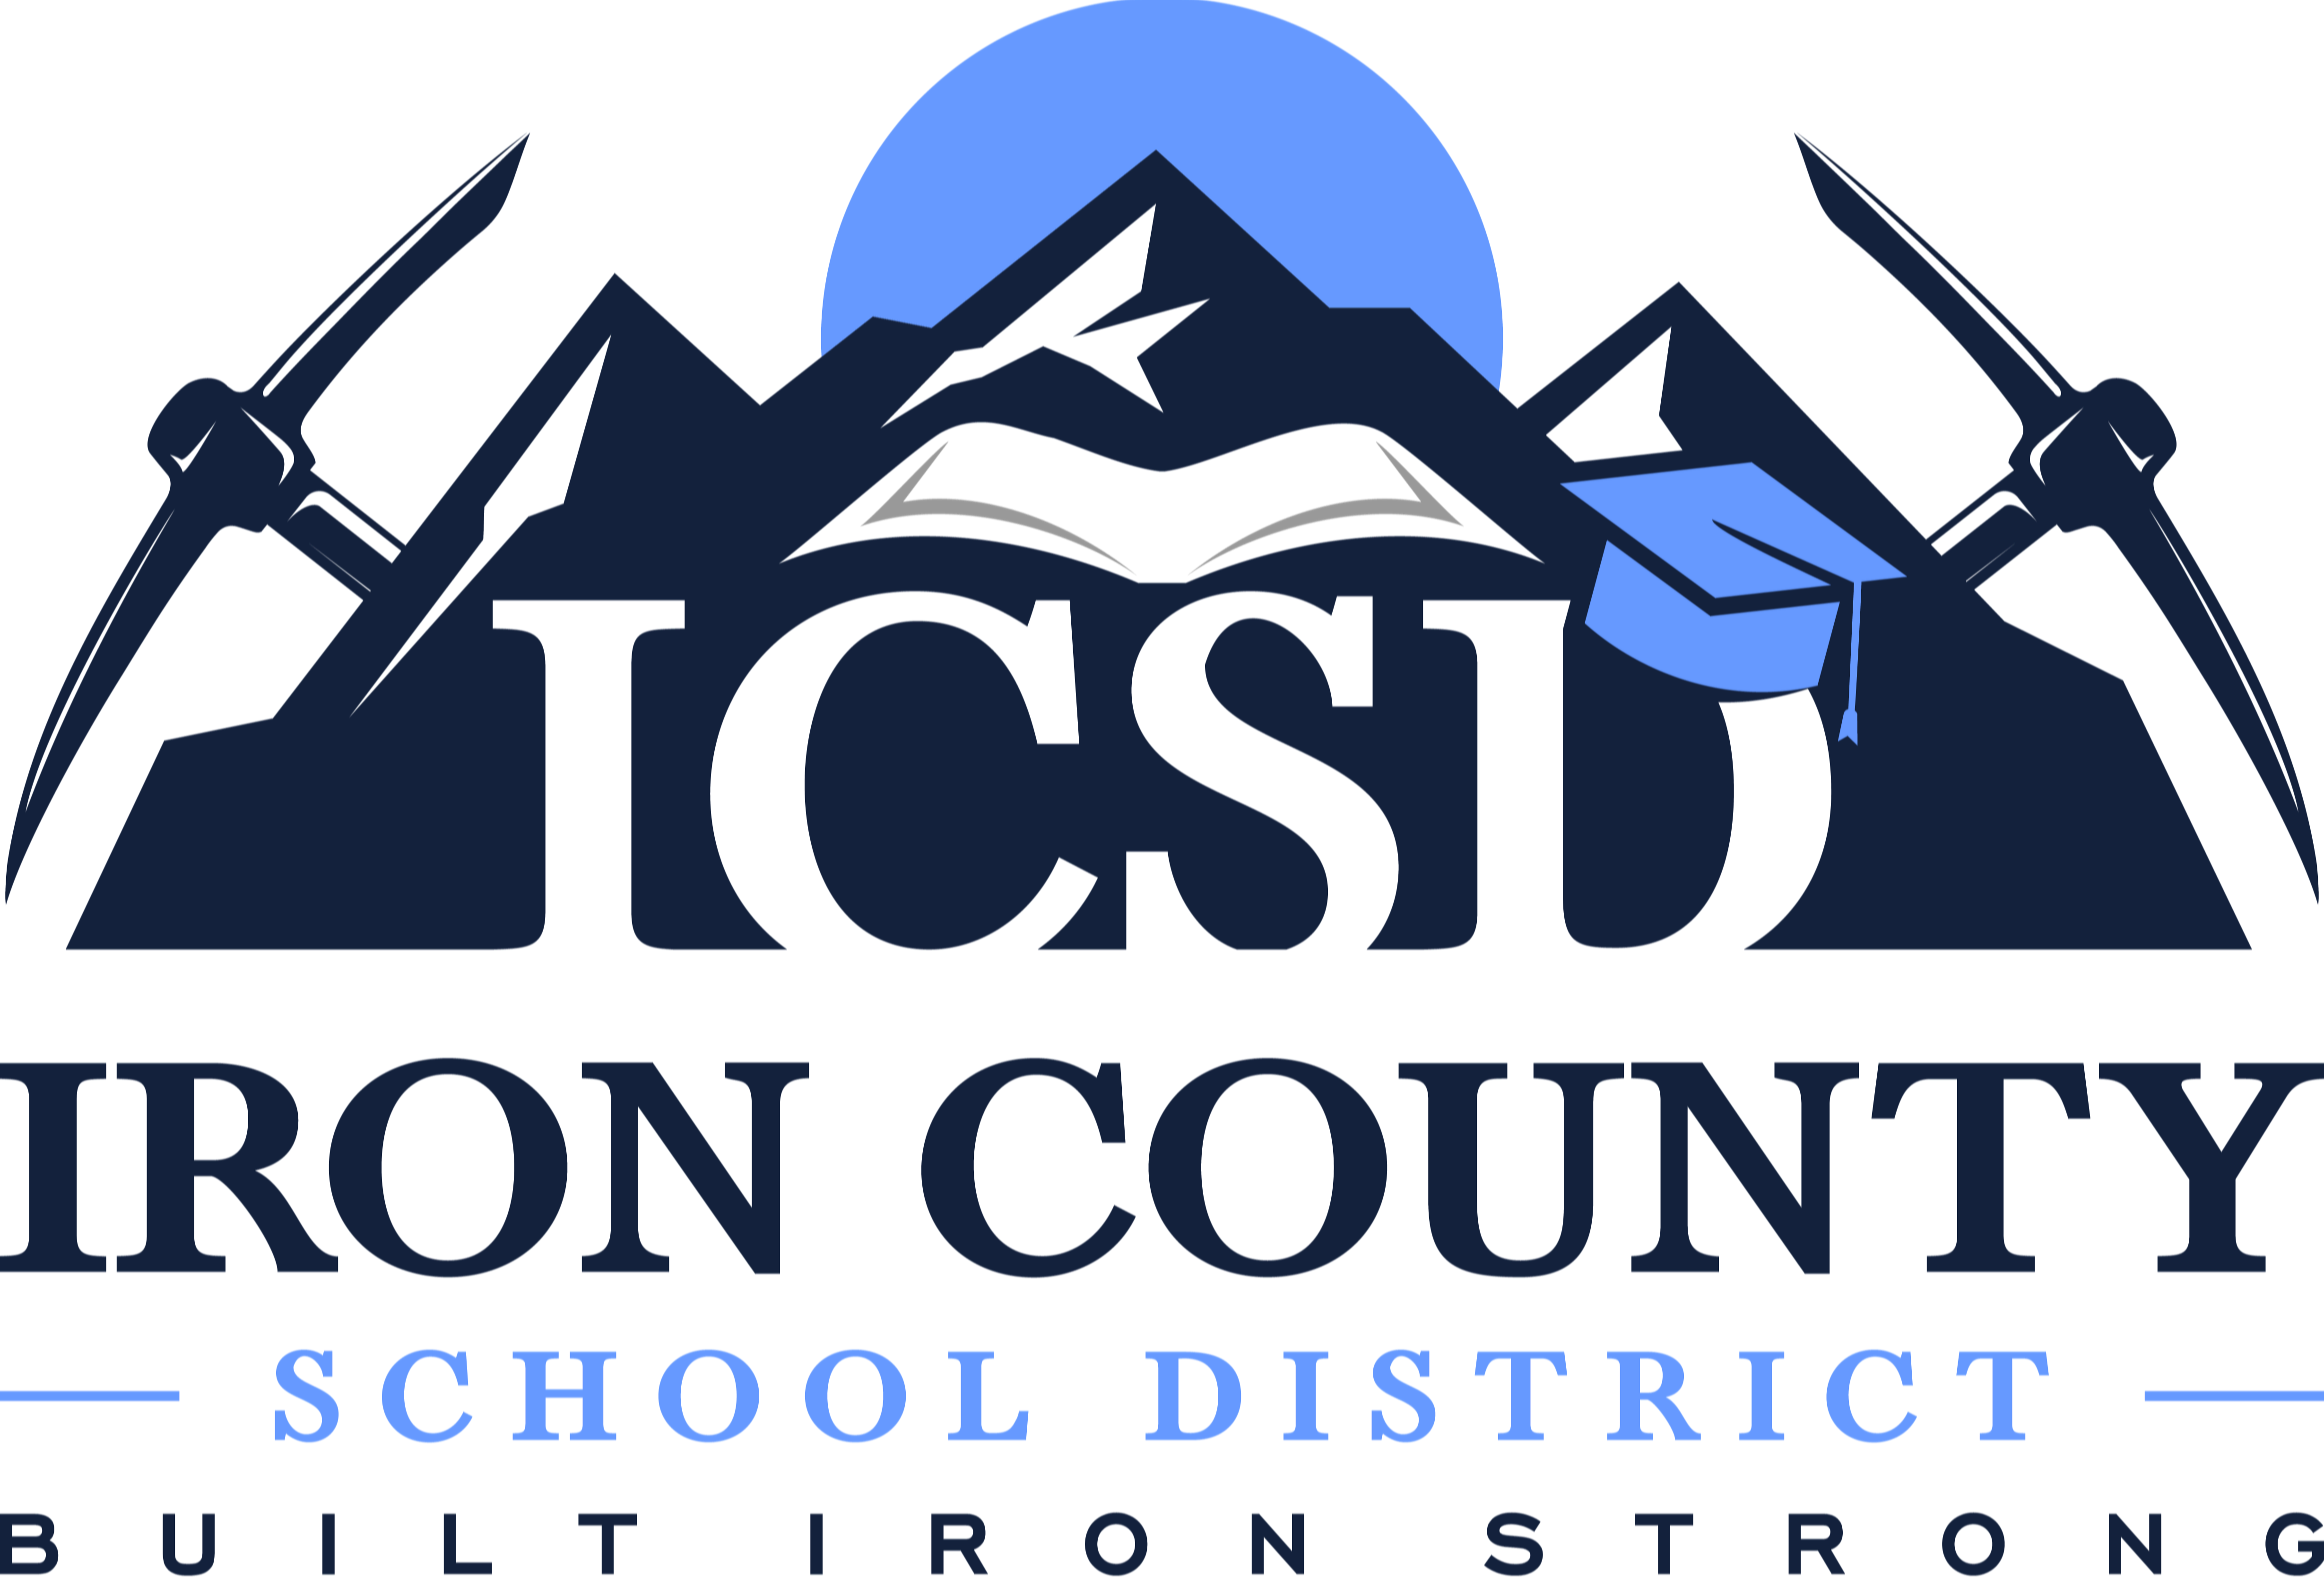 Iron county school district logo